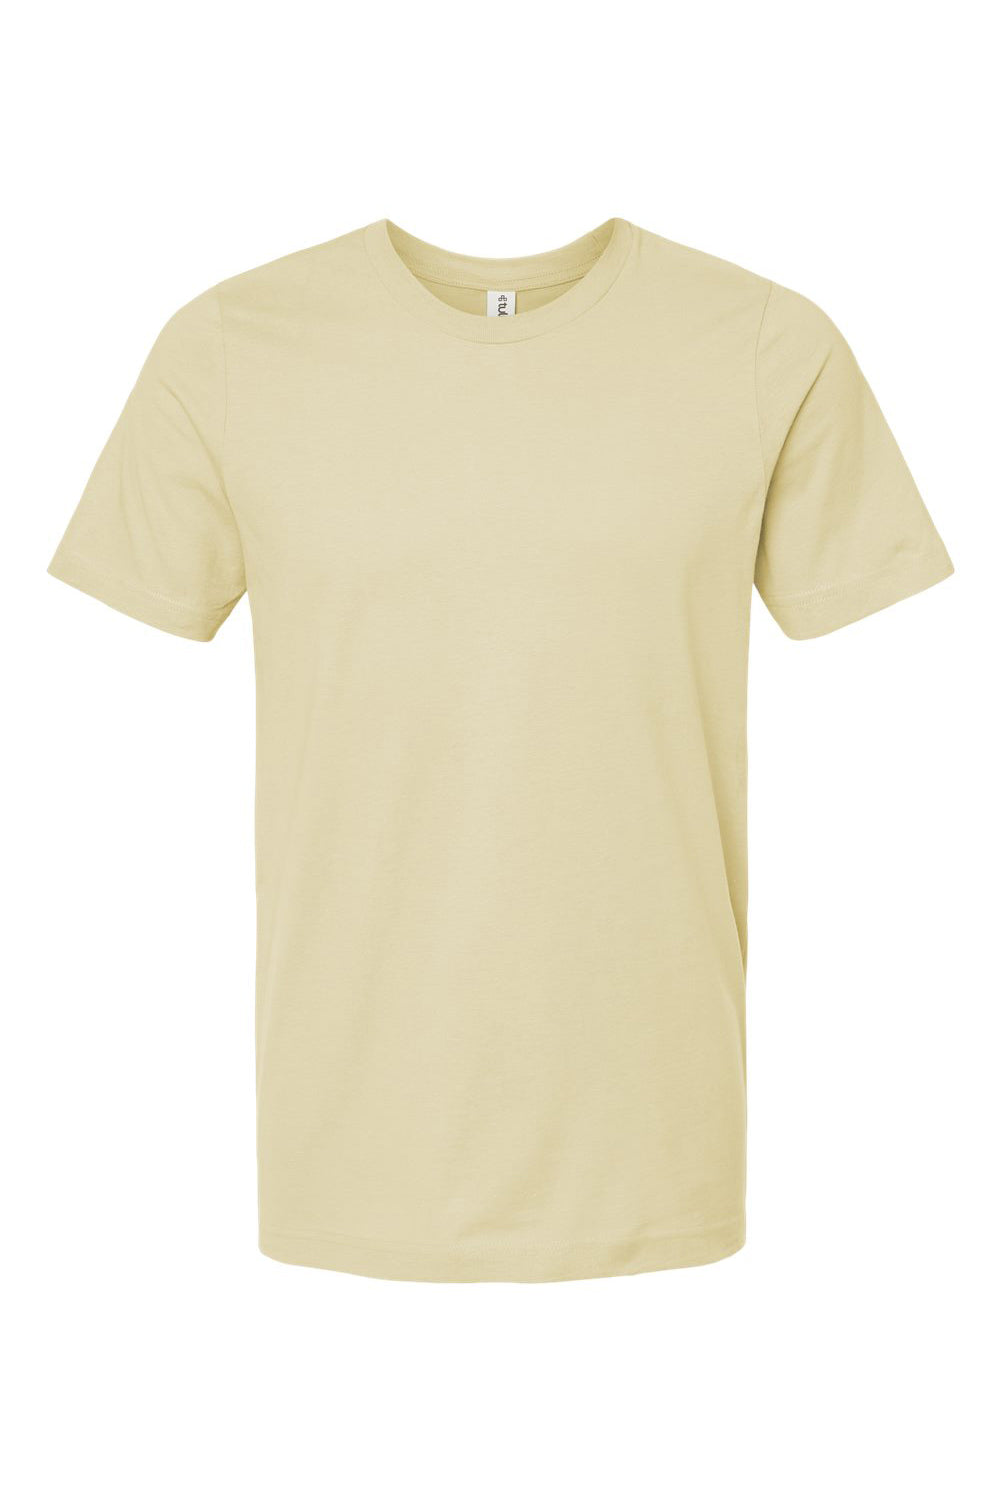 Tultex 602 Mens Short Sleeve Crewneck T-Shirt Cream Flat Front